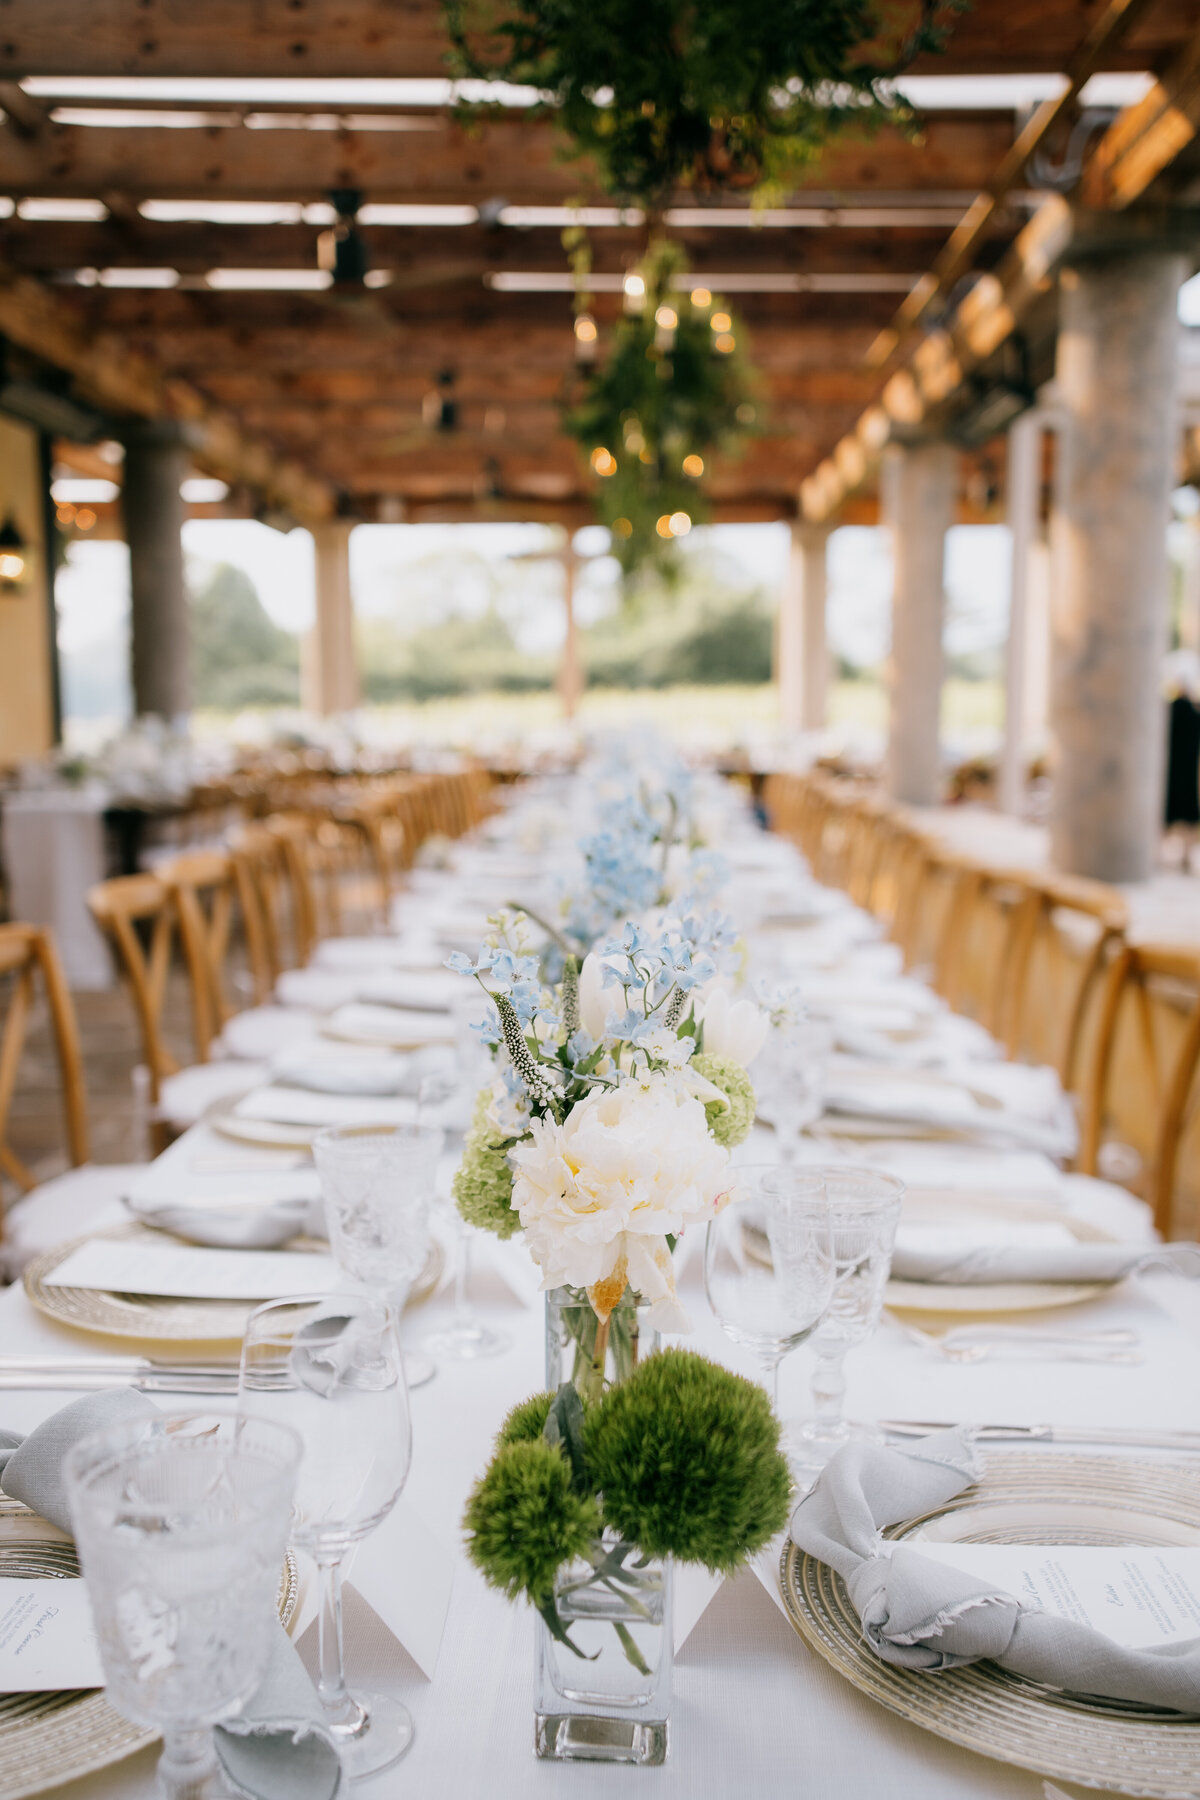 luxury_table_scape_luxury_wedding_planning - Copy